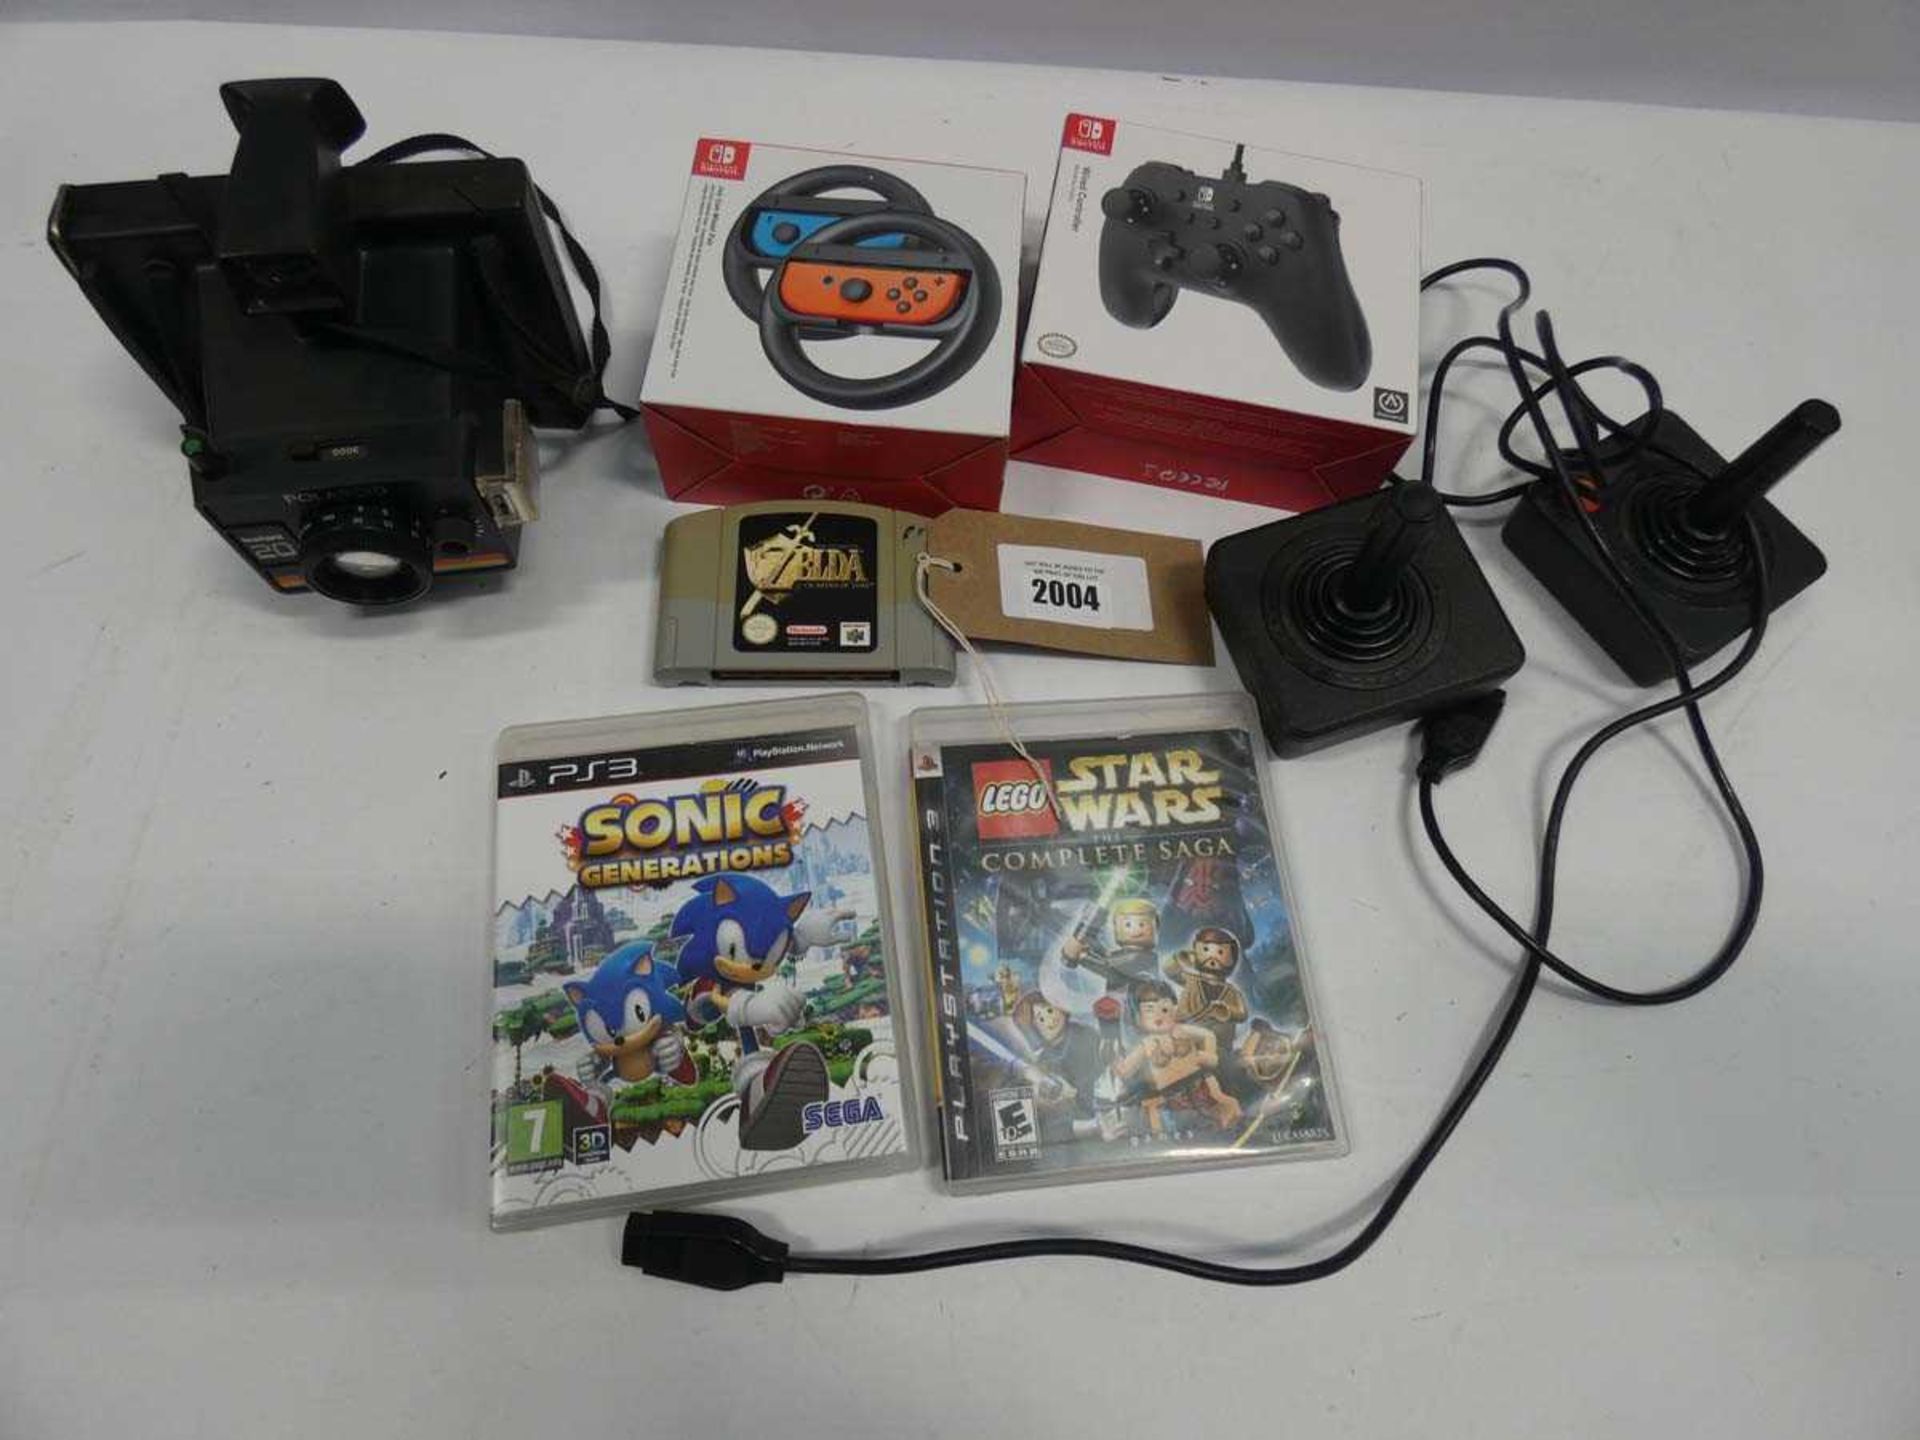 +VAT Switch controller accessories, N64 Zelda game, 2x PS3 games, 2x Atari joysticks and Polaroid